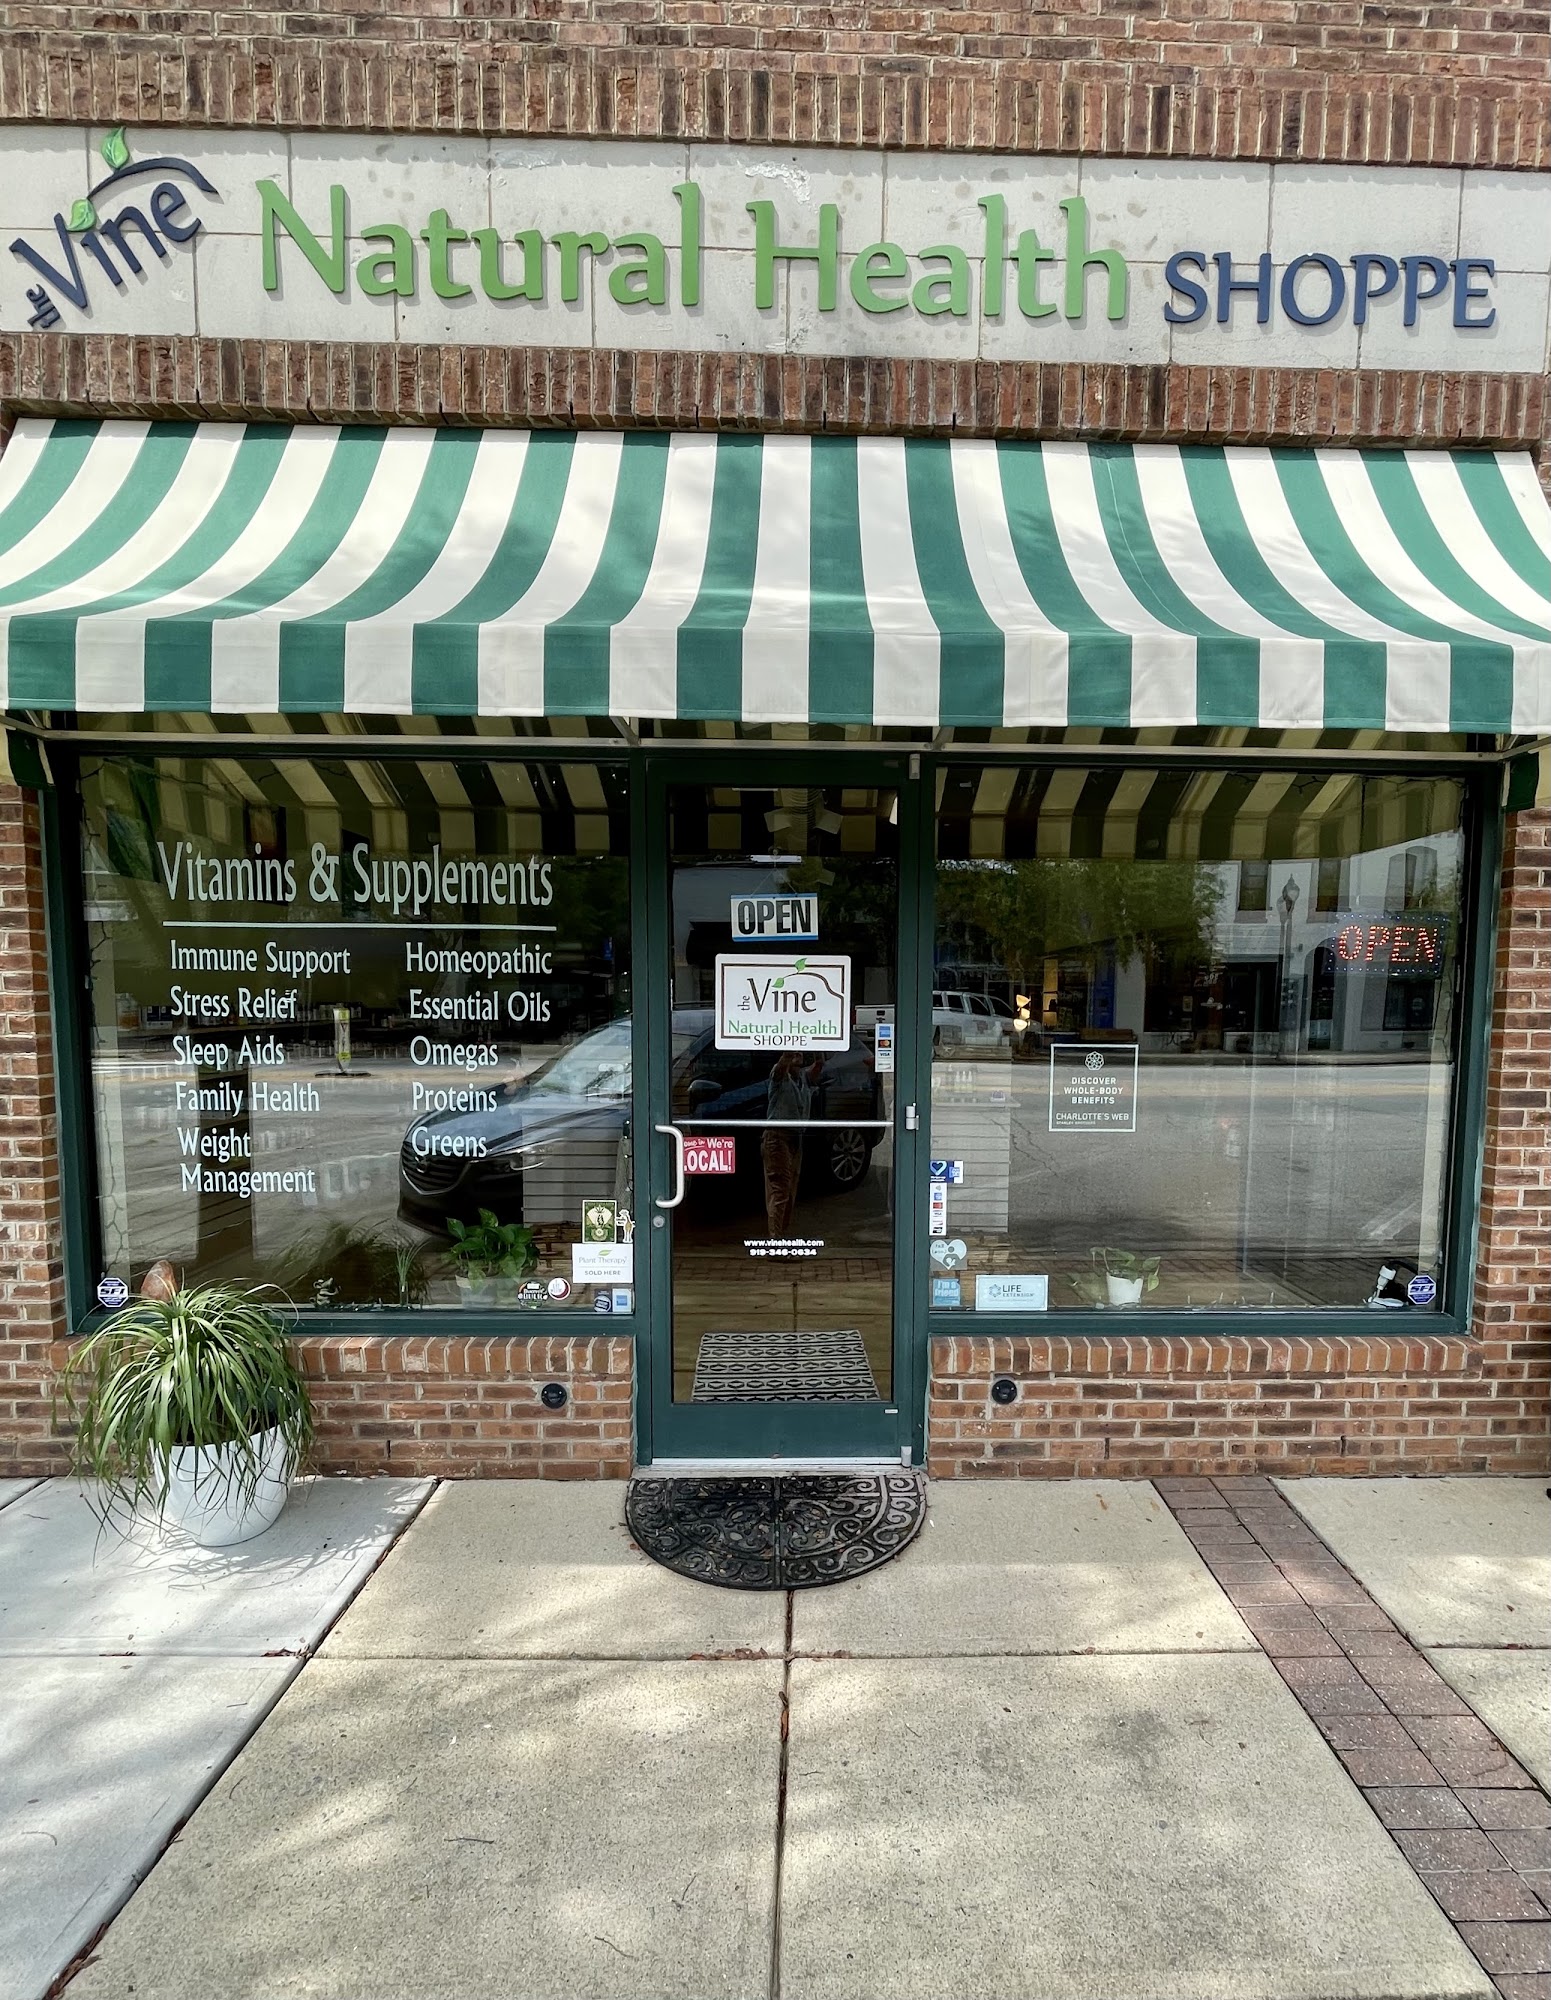 The Vine Natural Health Shoppe